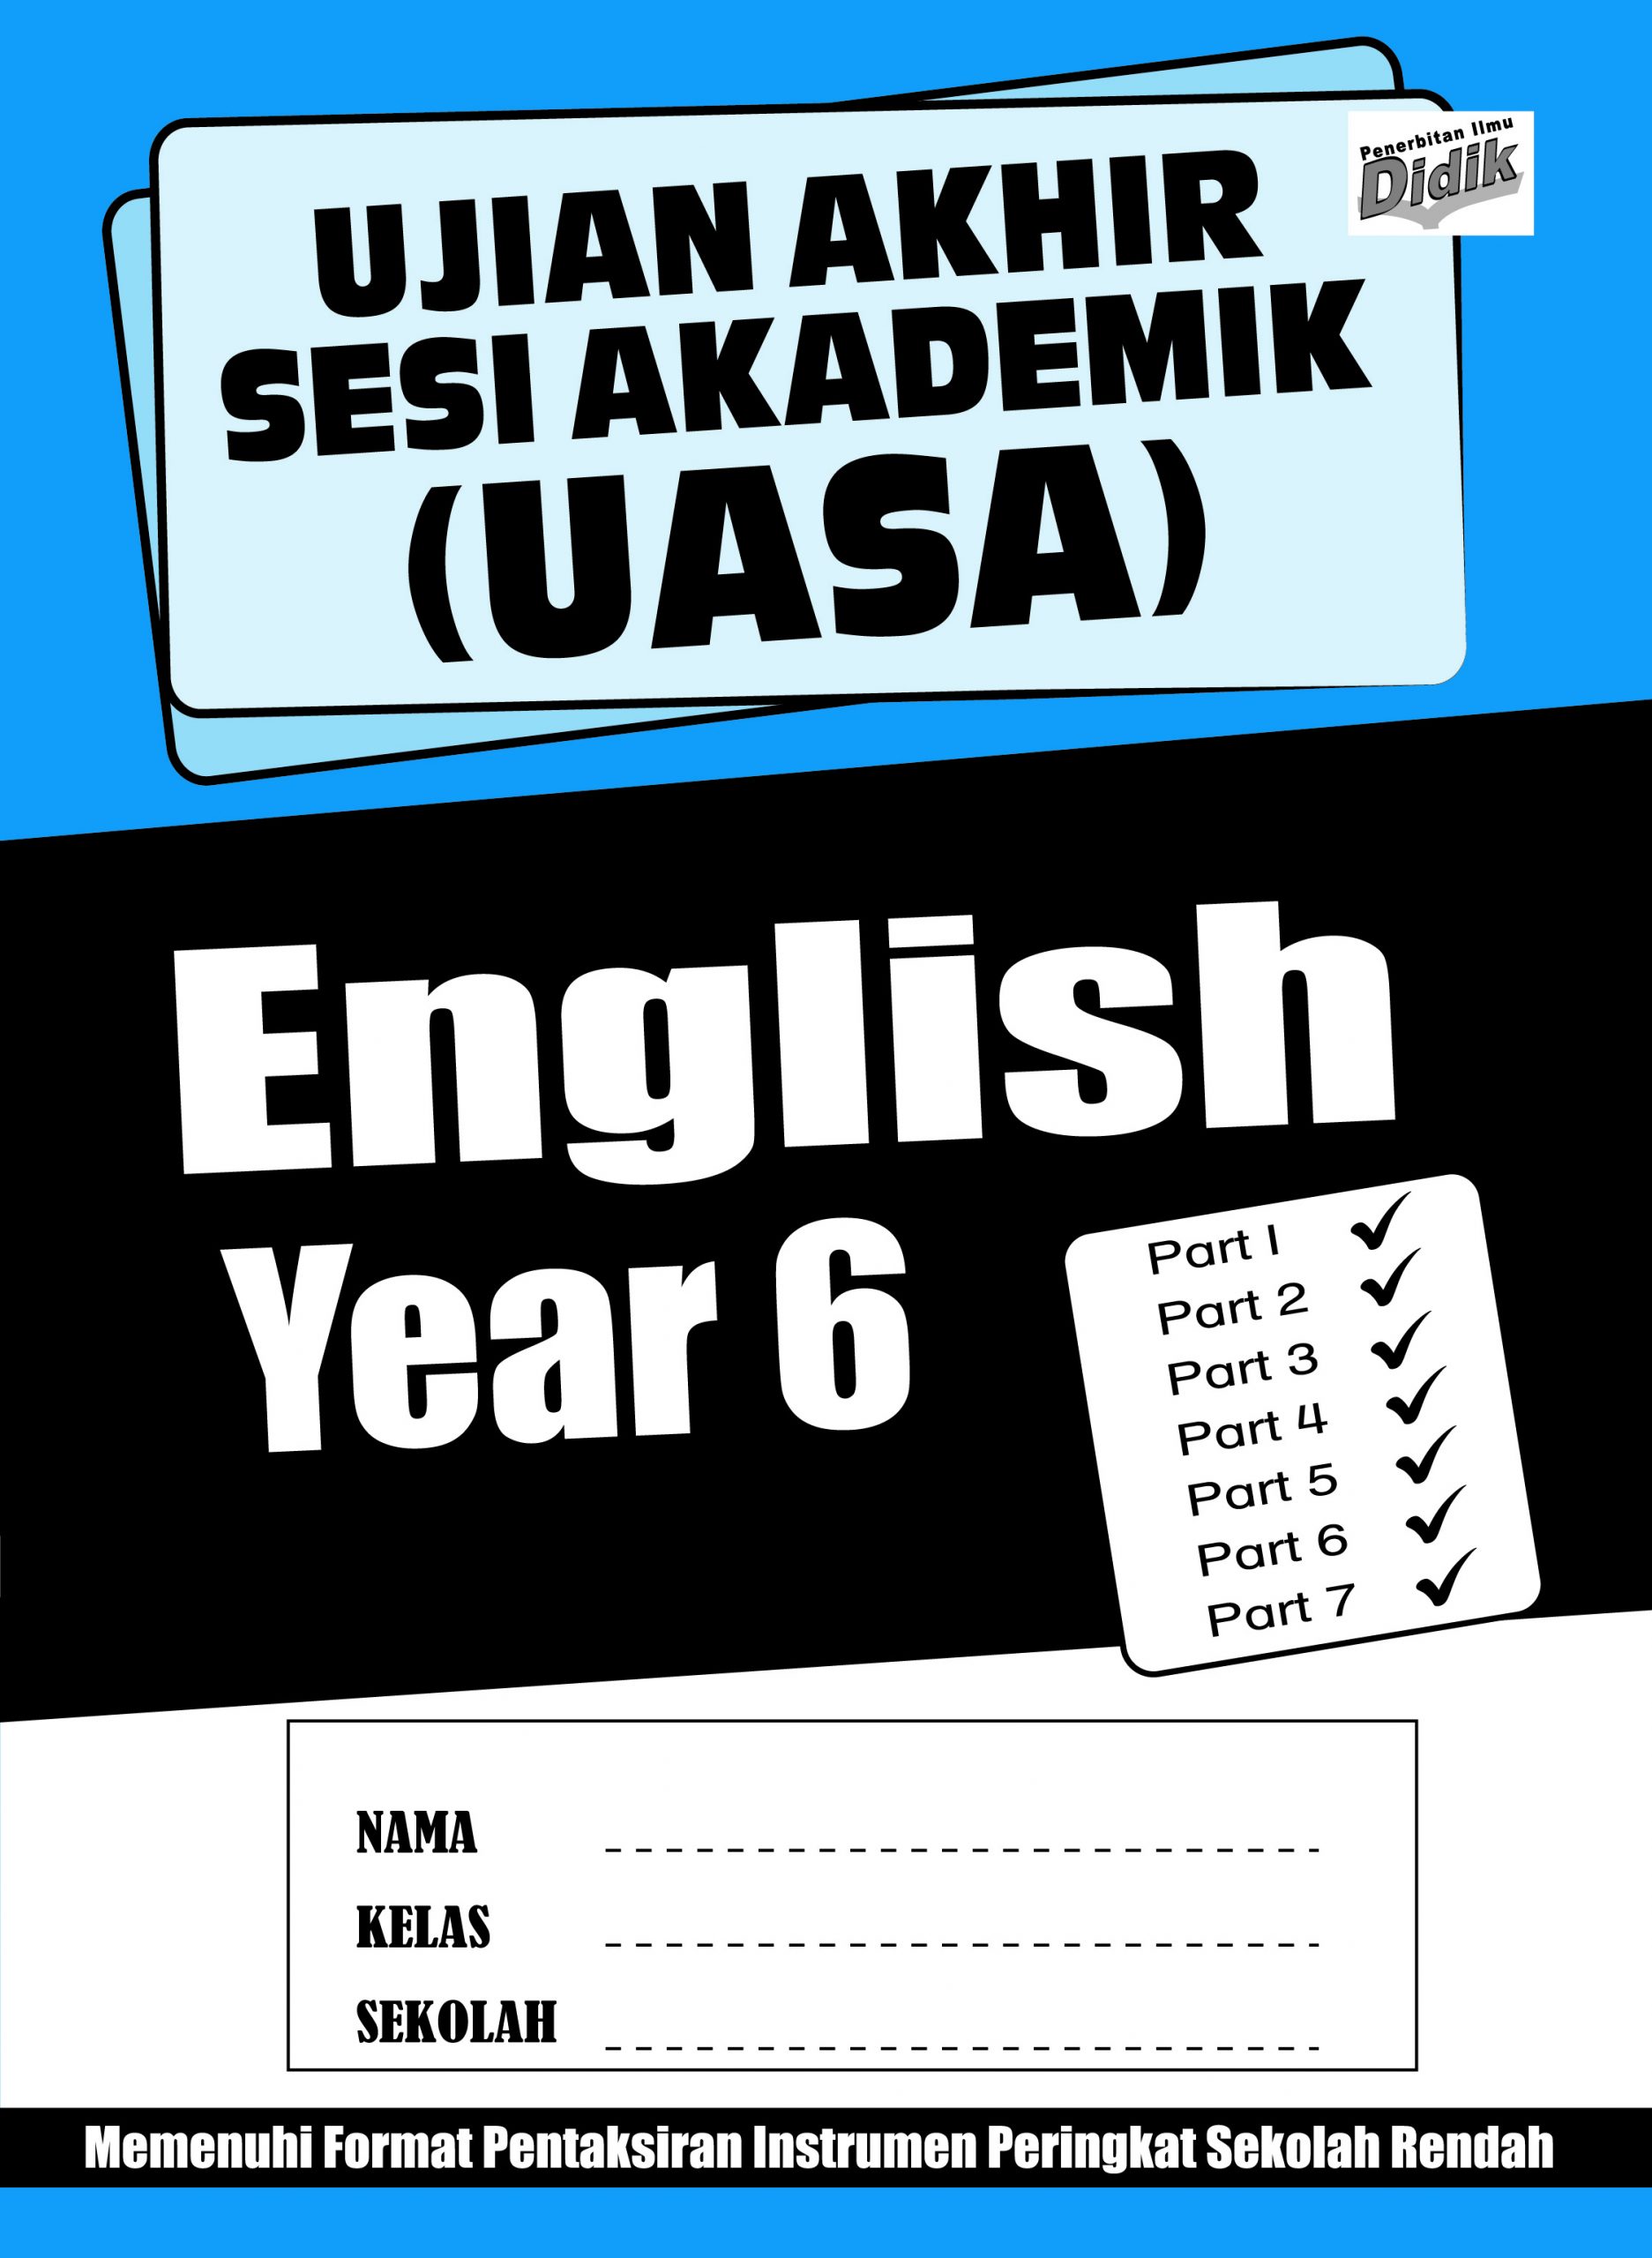 ujian-akhir-sesi-akademik-uasa-english-year-6-pustaka-vision-sdn-bhd